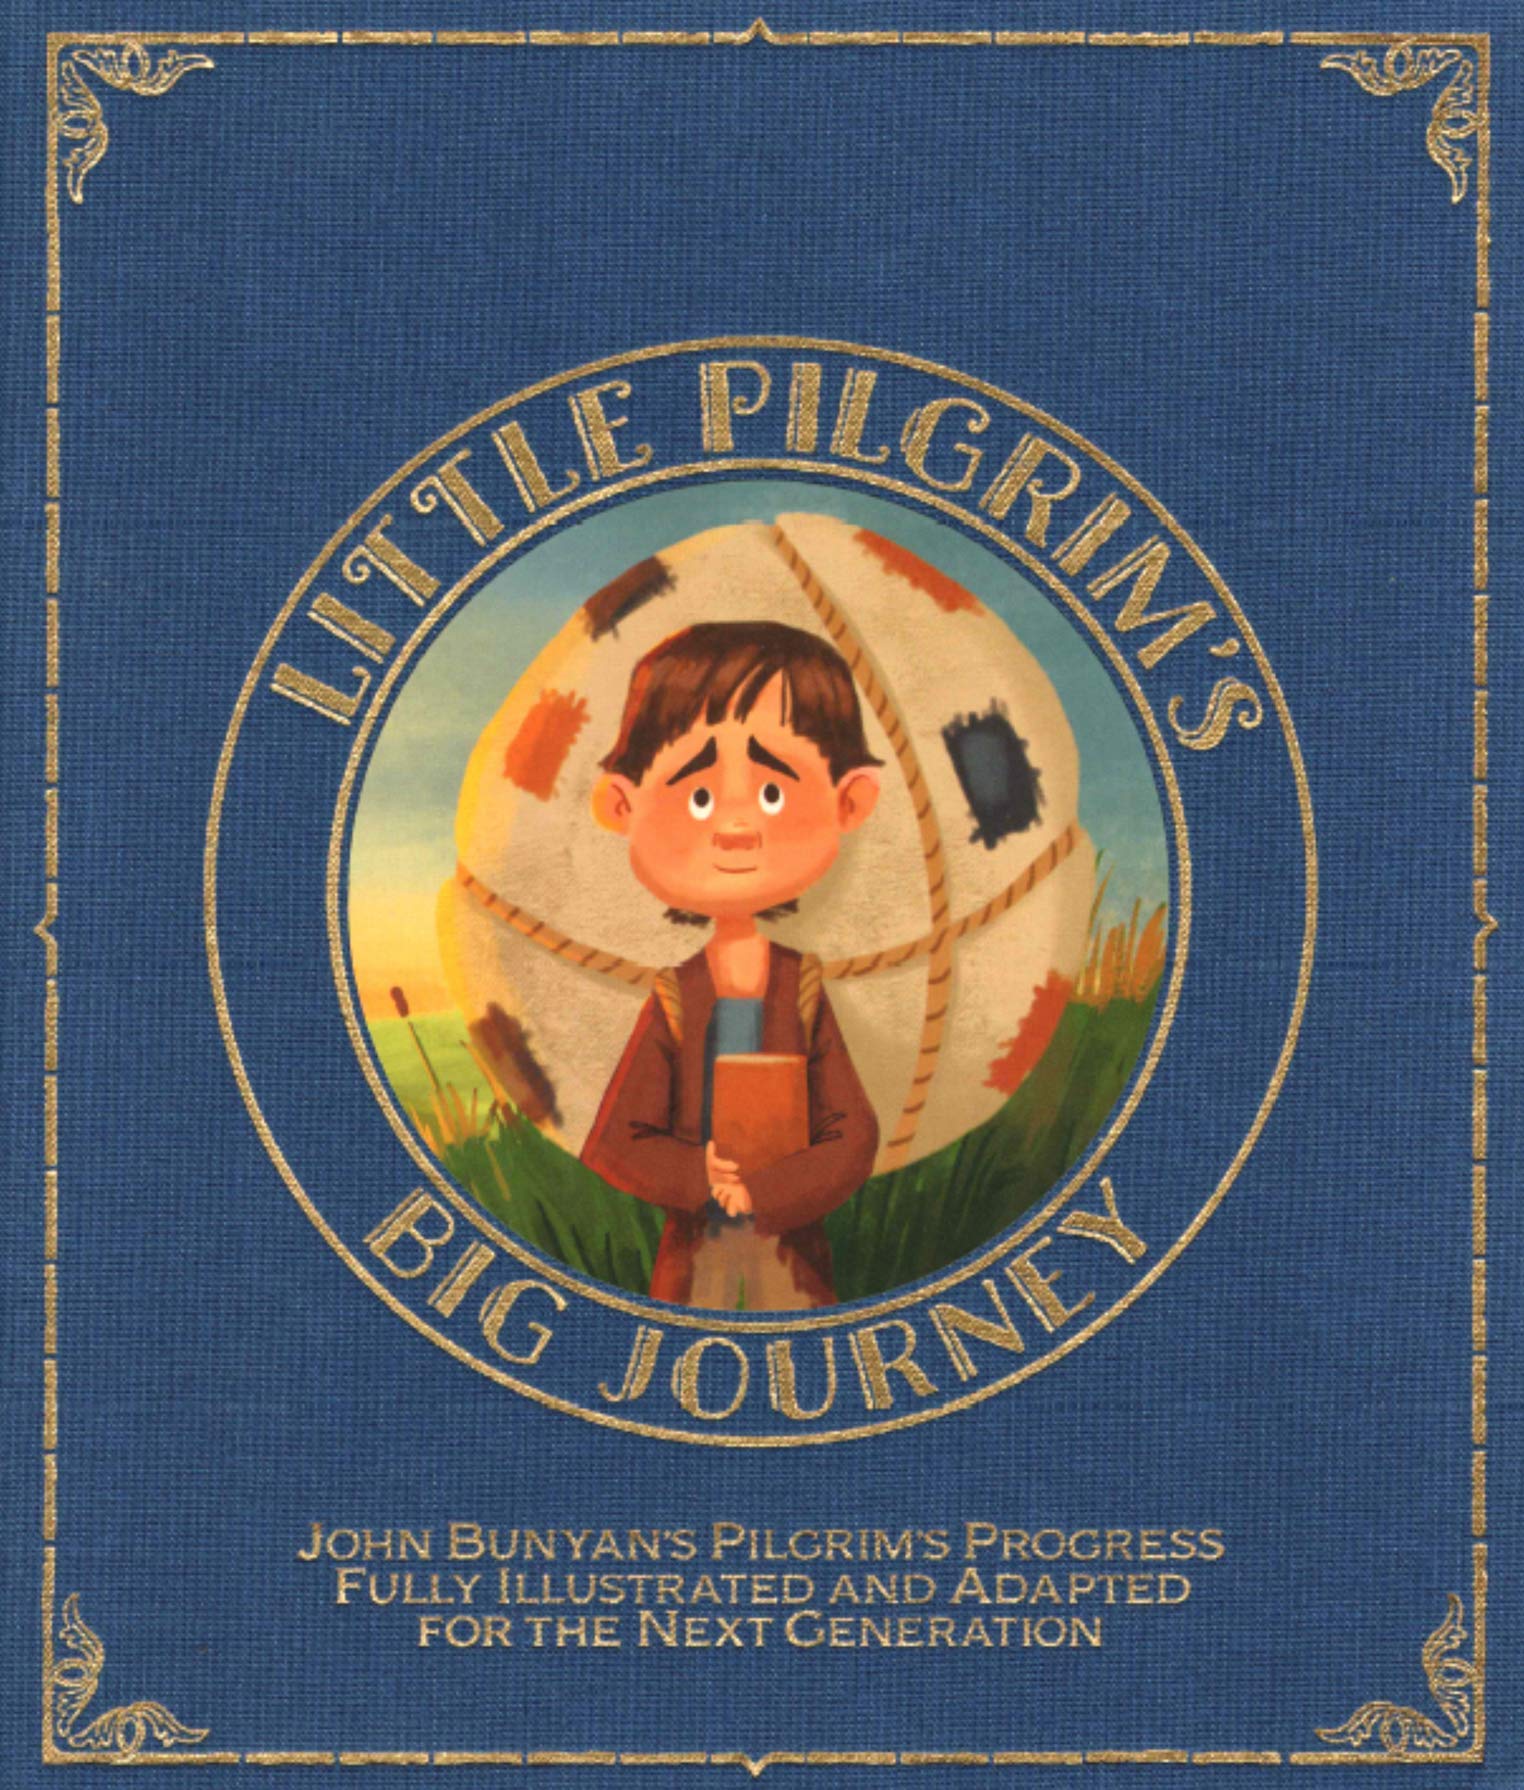 little pilgrim's big journey used